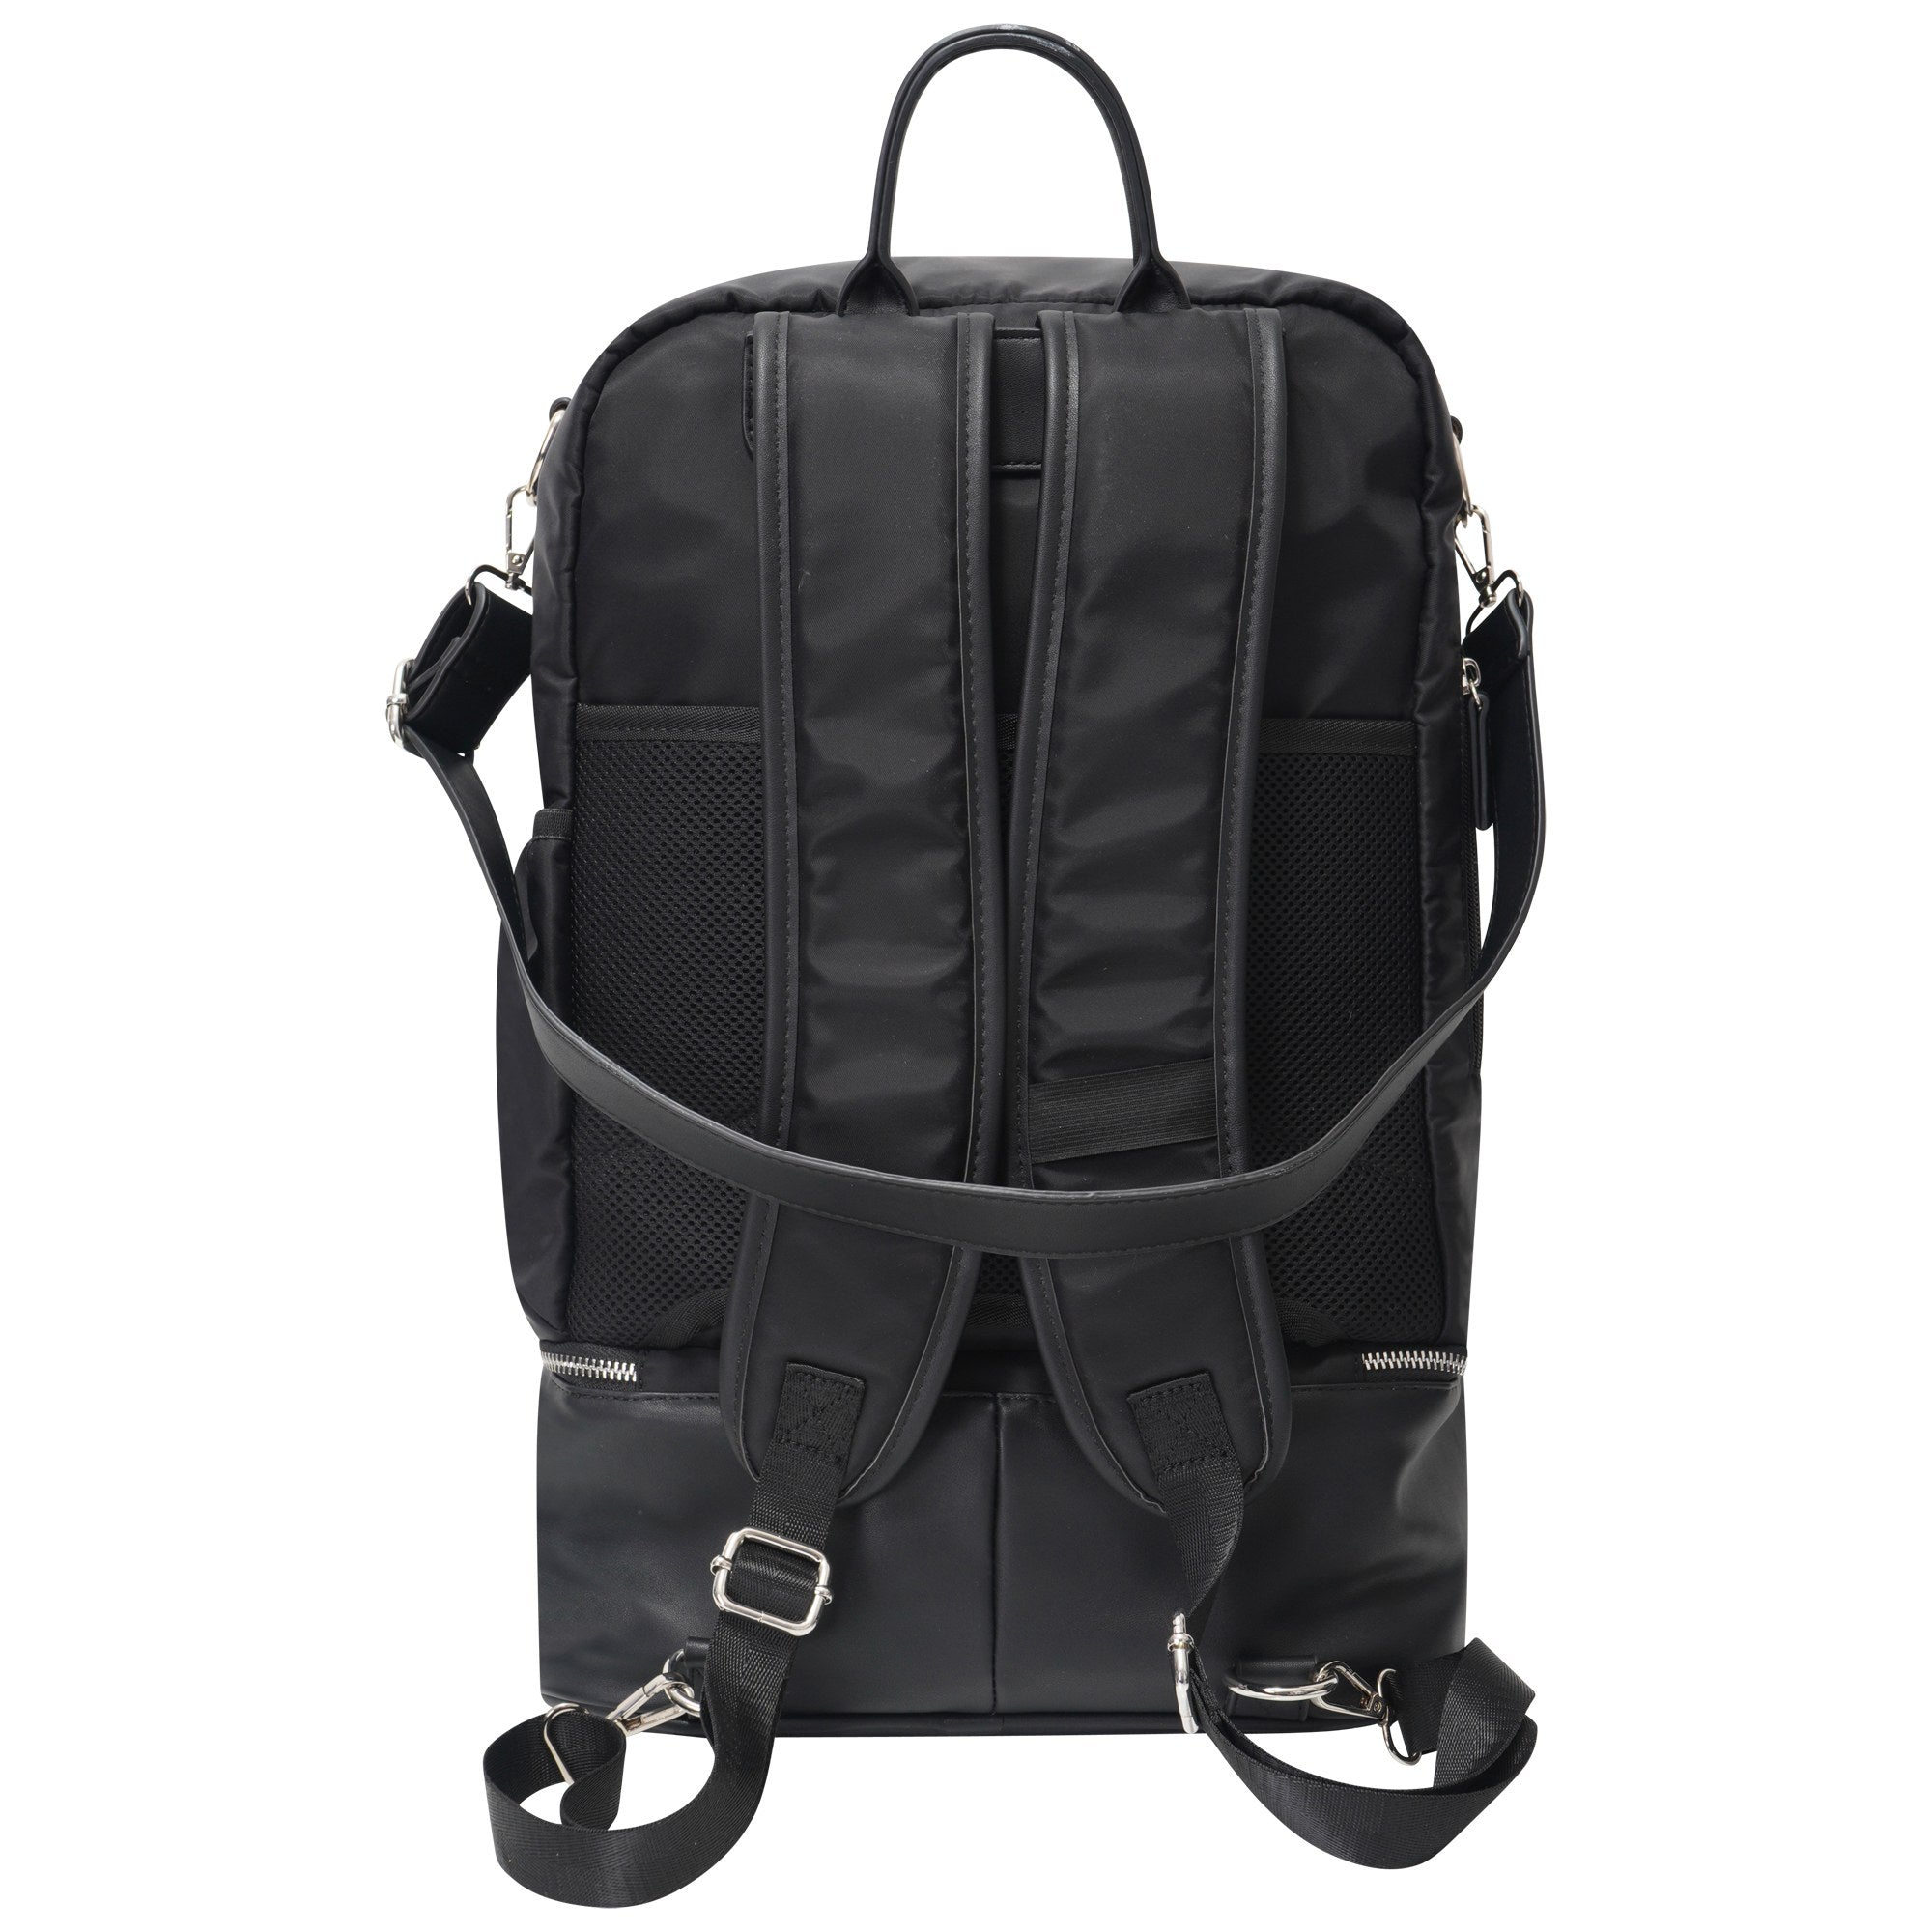 stylish travel backpack for women